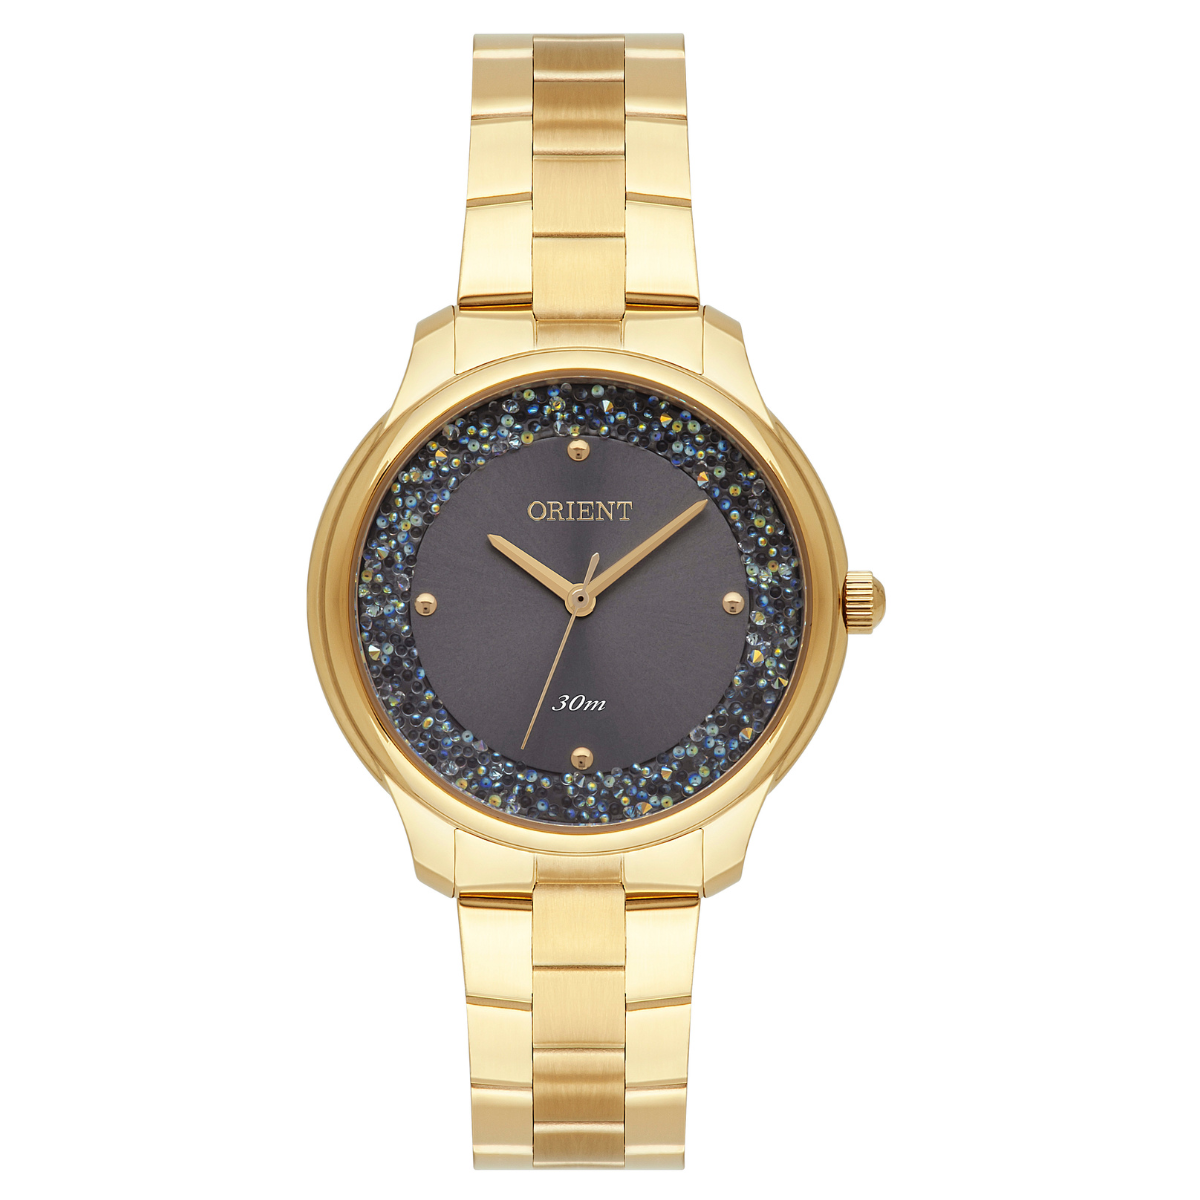 Relógio Orient Eternal Clássico Feminino - FGSS0191 G1KX Dourado 1